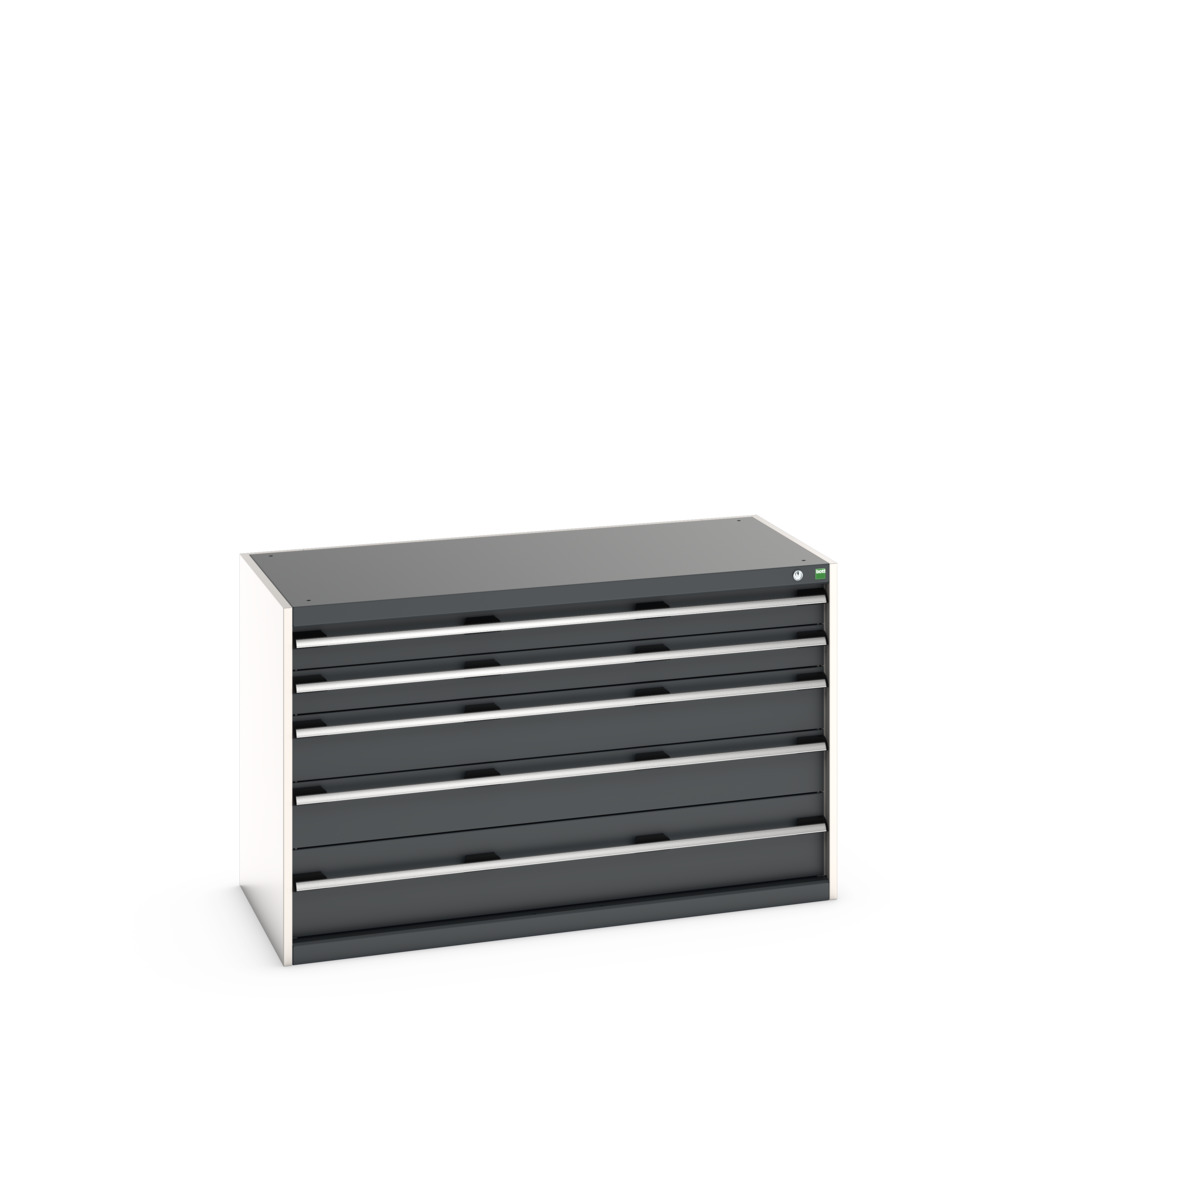 40022107. - cubio drawer cabinet